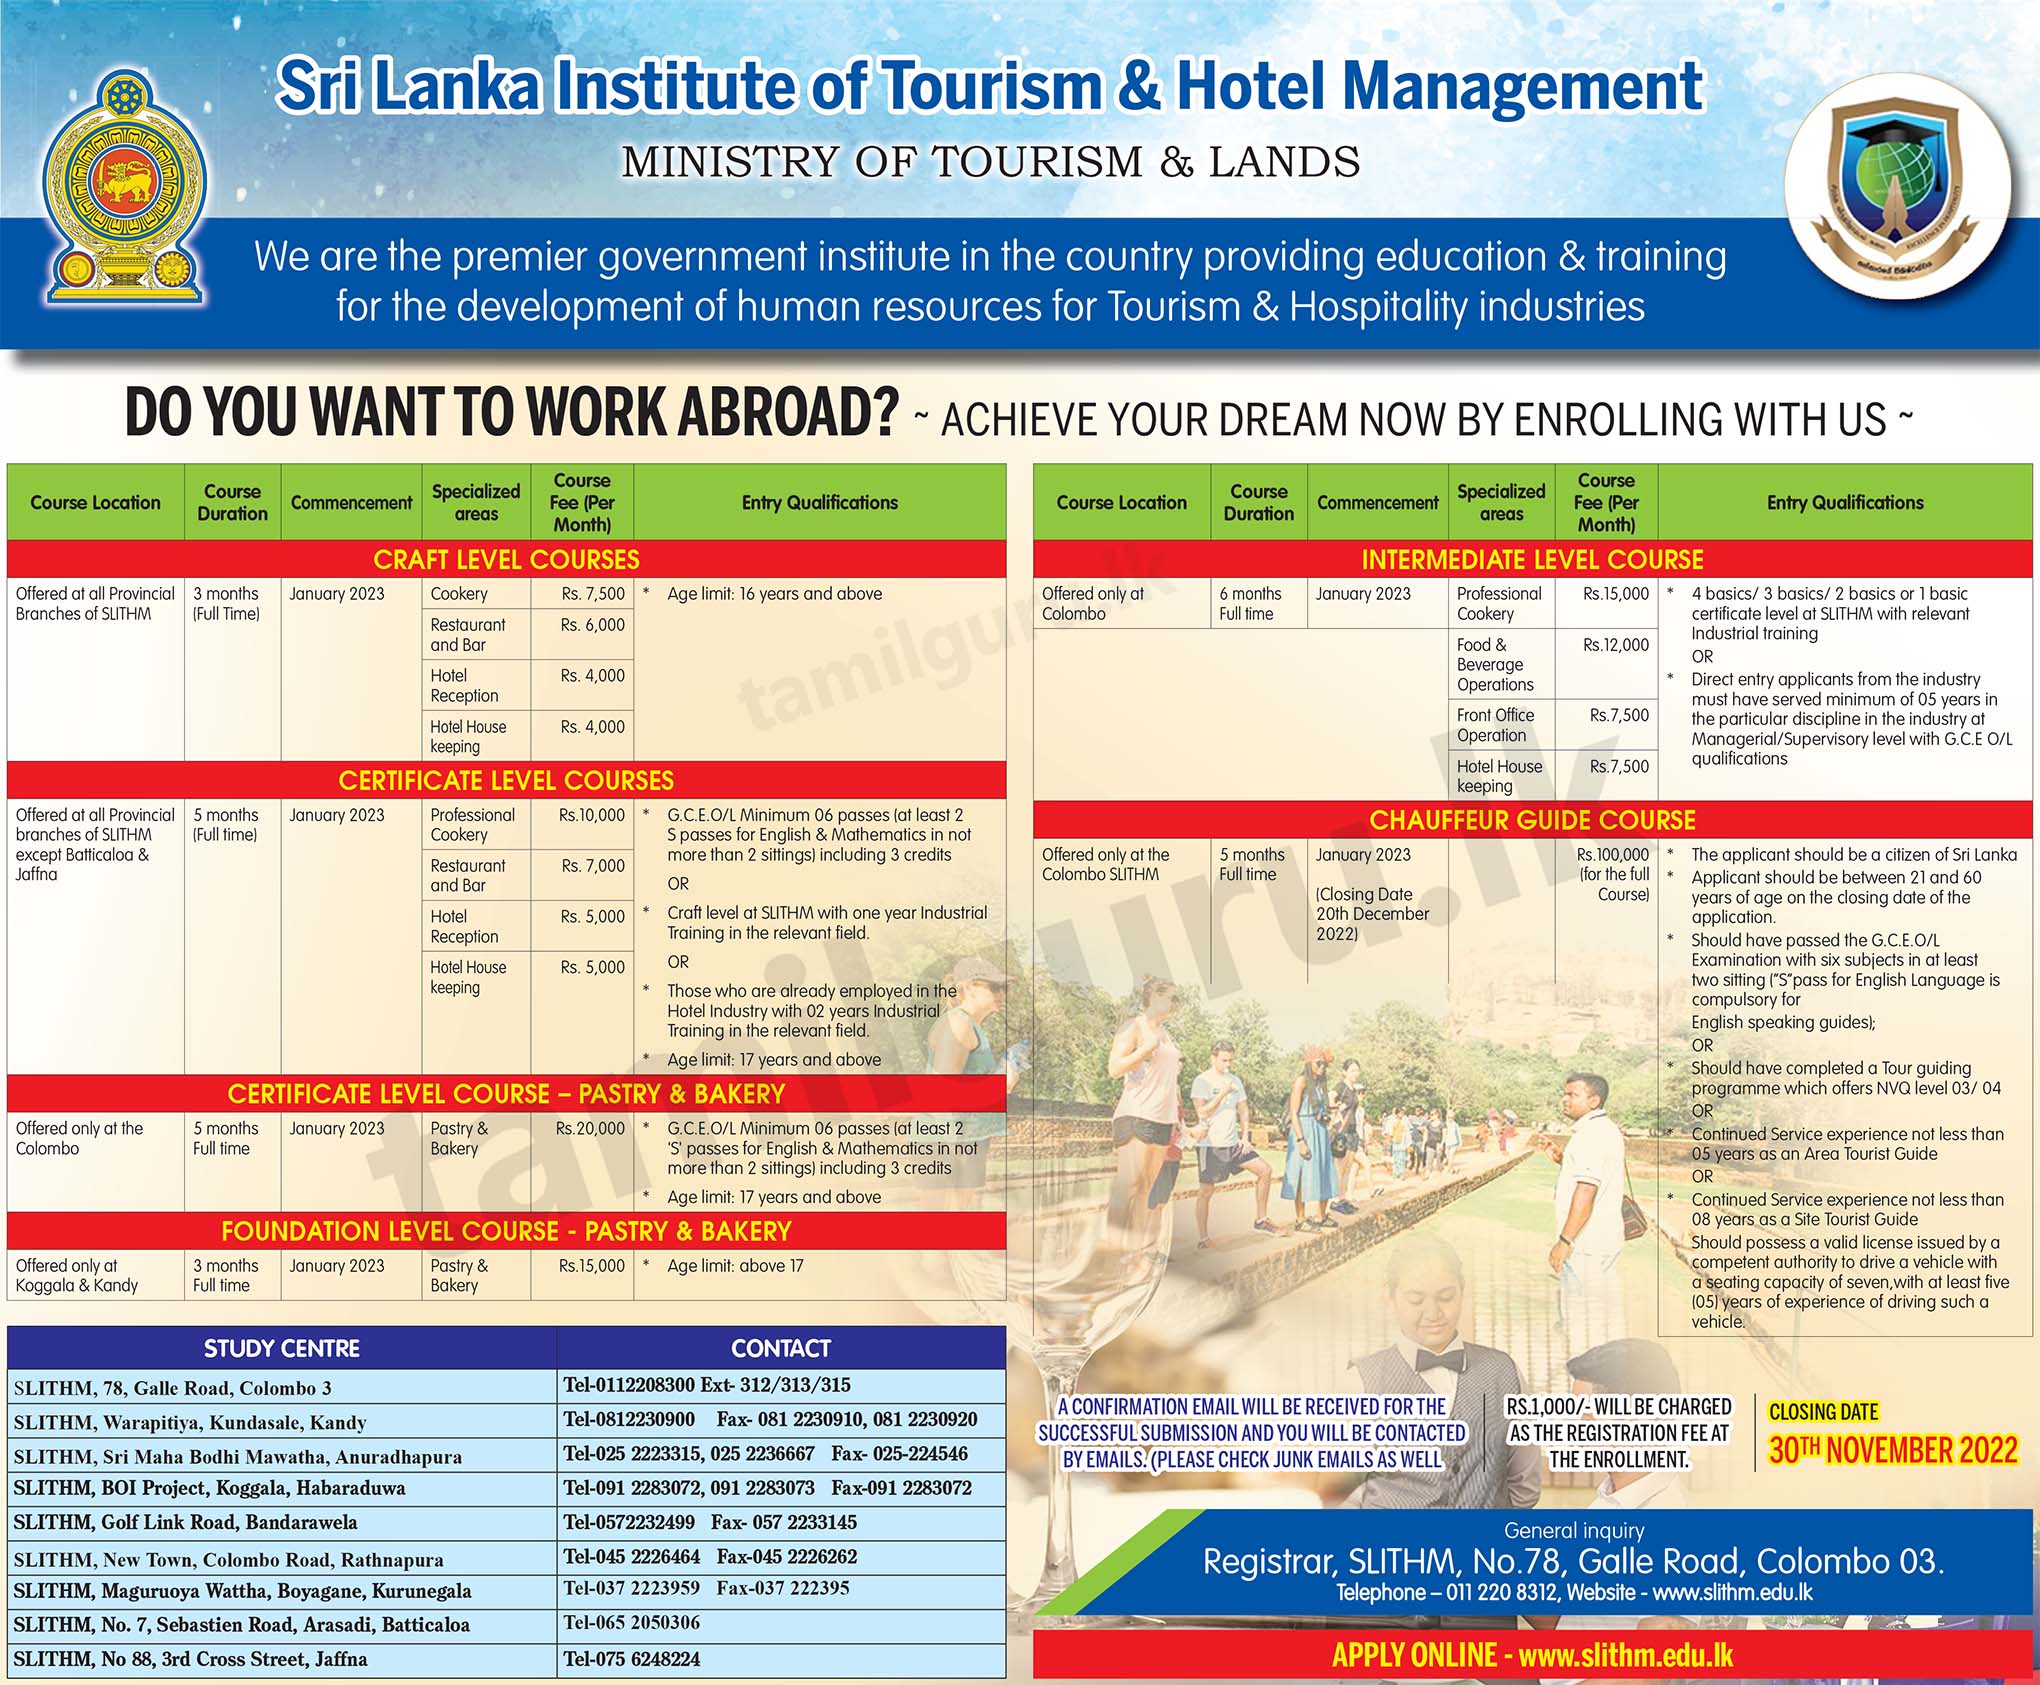 Sri Lanka Institute of Tourism & Hotel Management (SLITHM) - Application For Courses 2022 (January 2023)